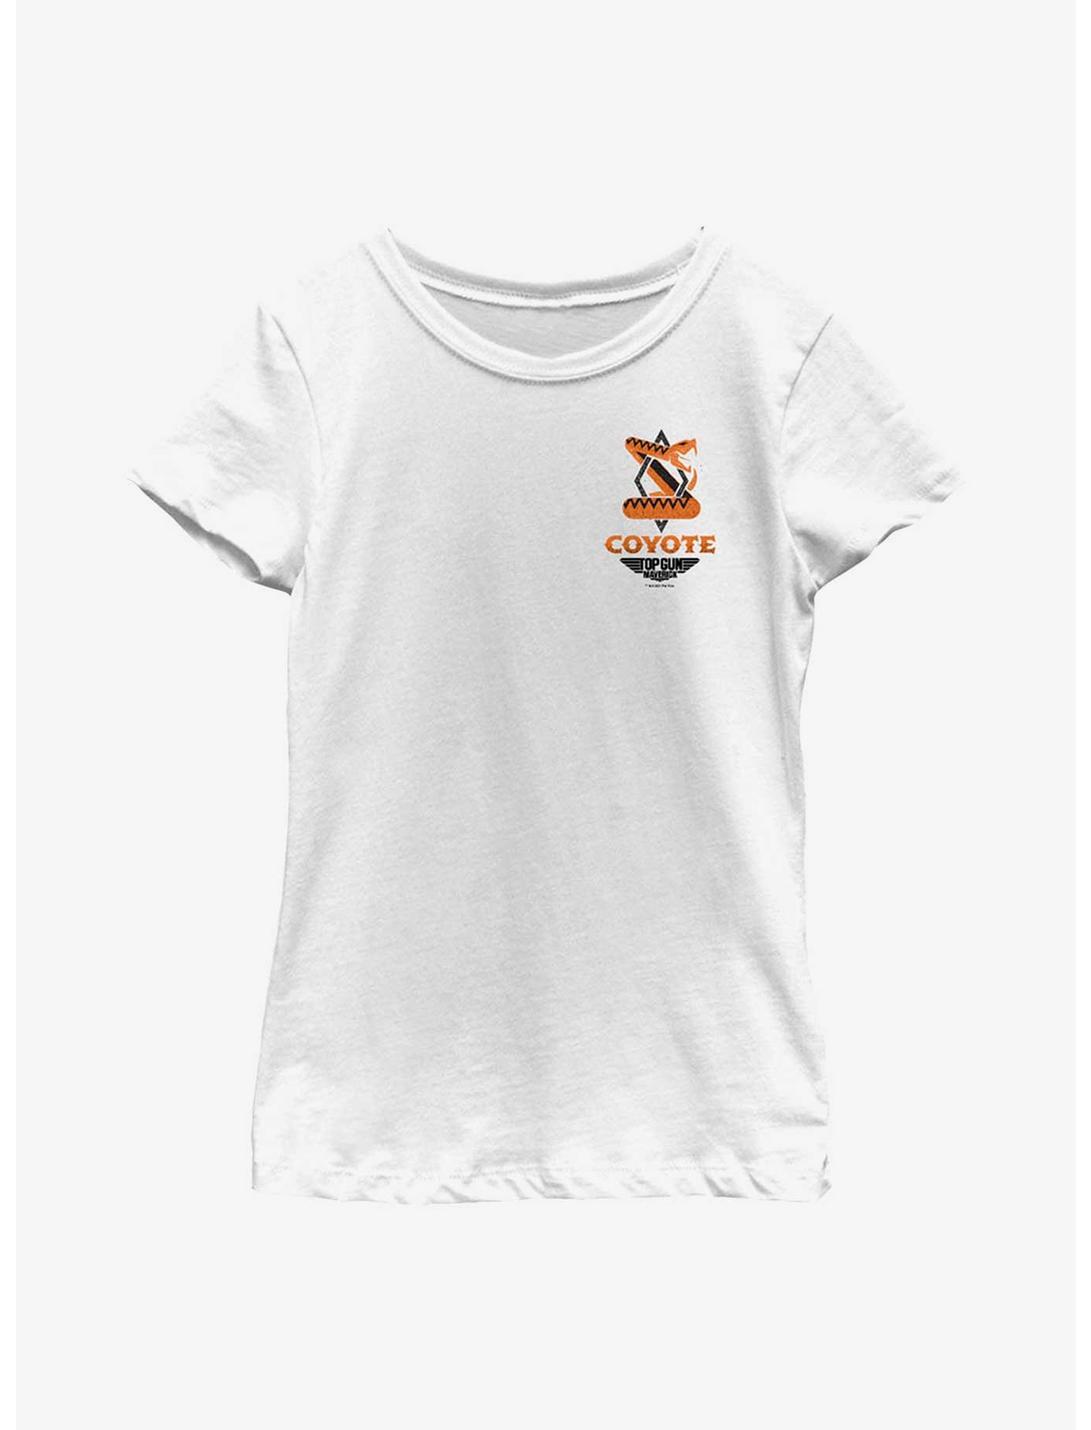 Top Gun: Maverick Coyote Patch Youth Girls T-Shirt, WHITE, hi-res